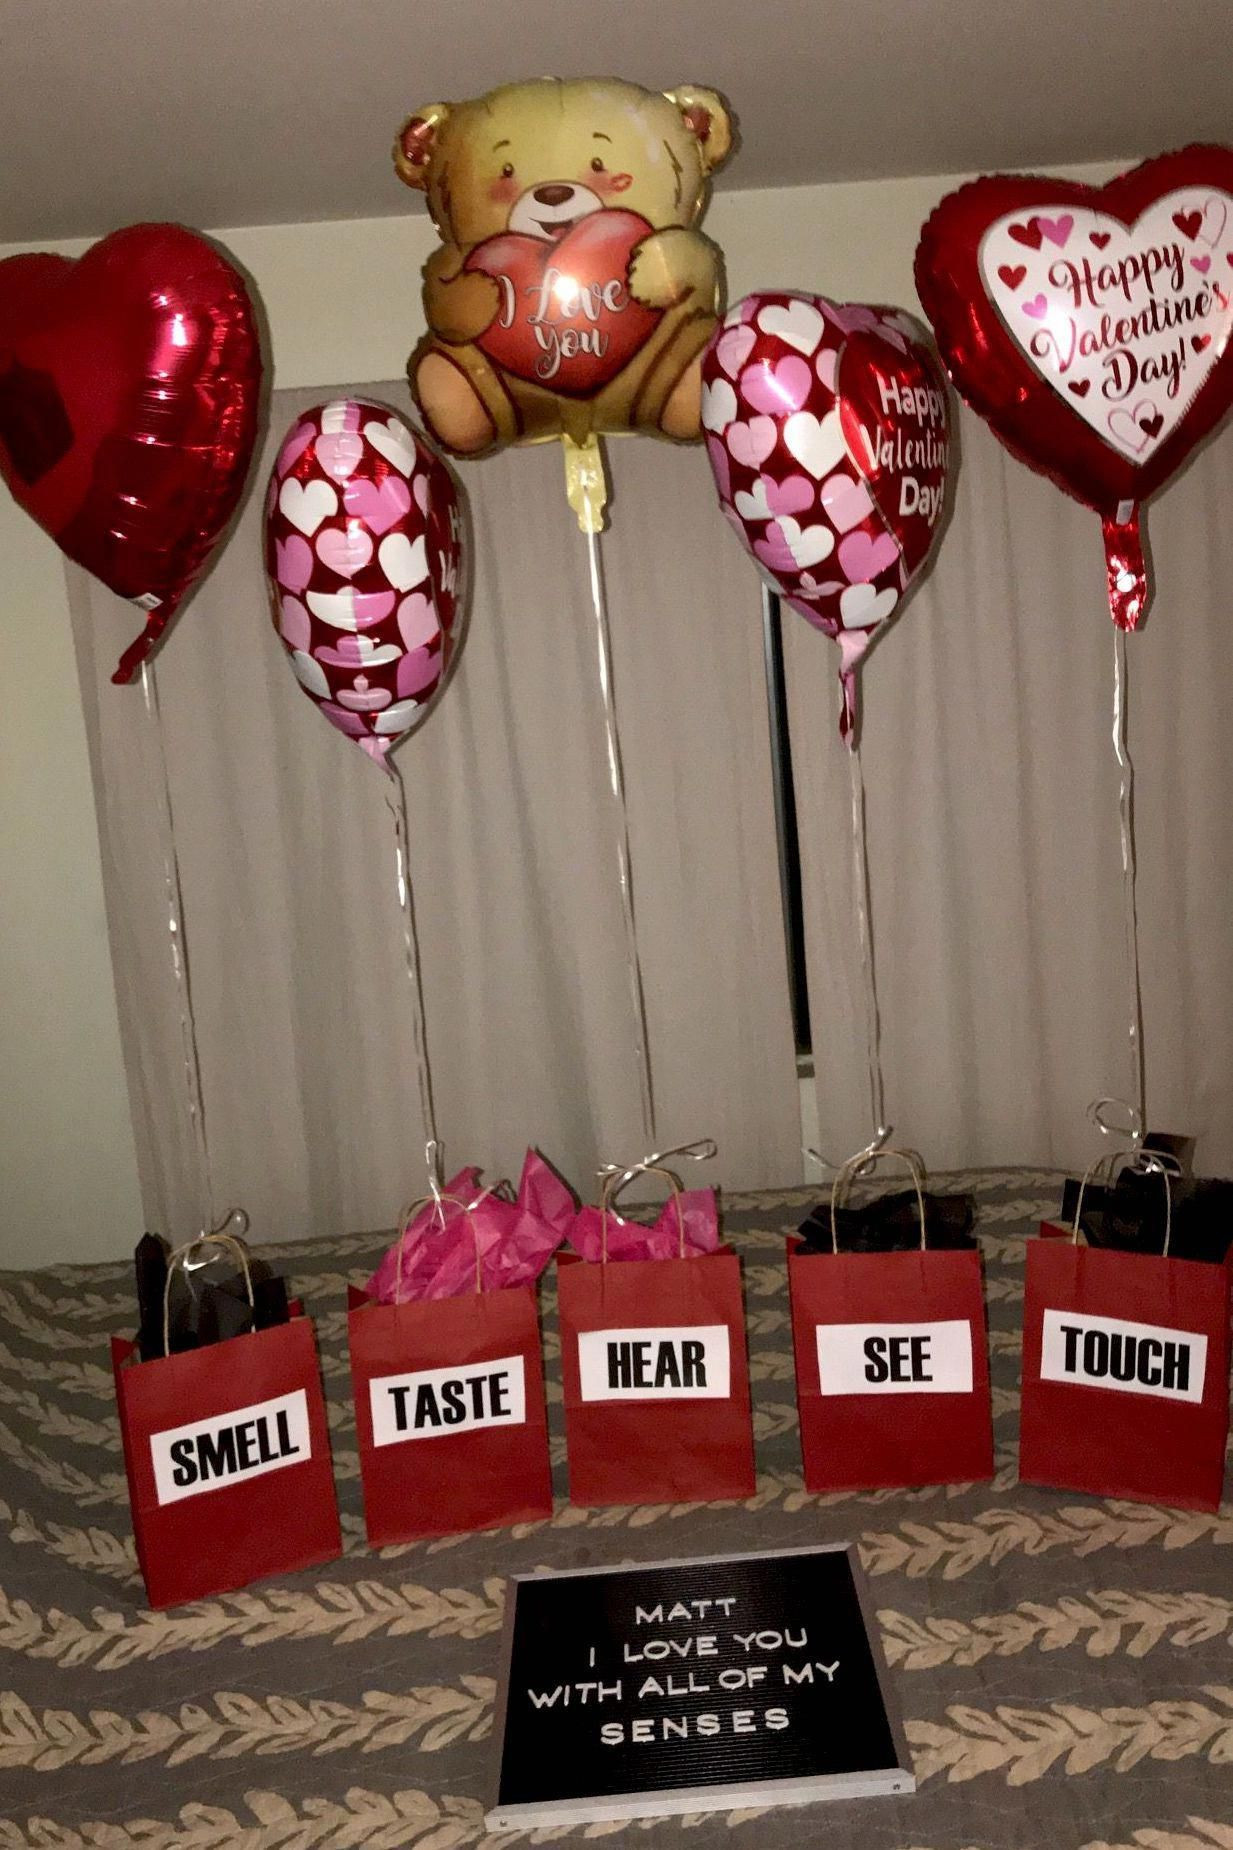 Couple Gift Ideas Your Boyfriend
 Romantic 5 Senses Gift Ideas For Your Boyfriend Find out